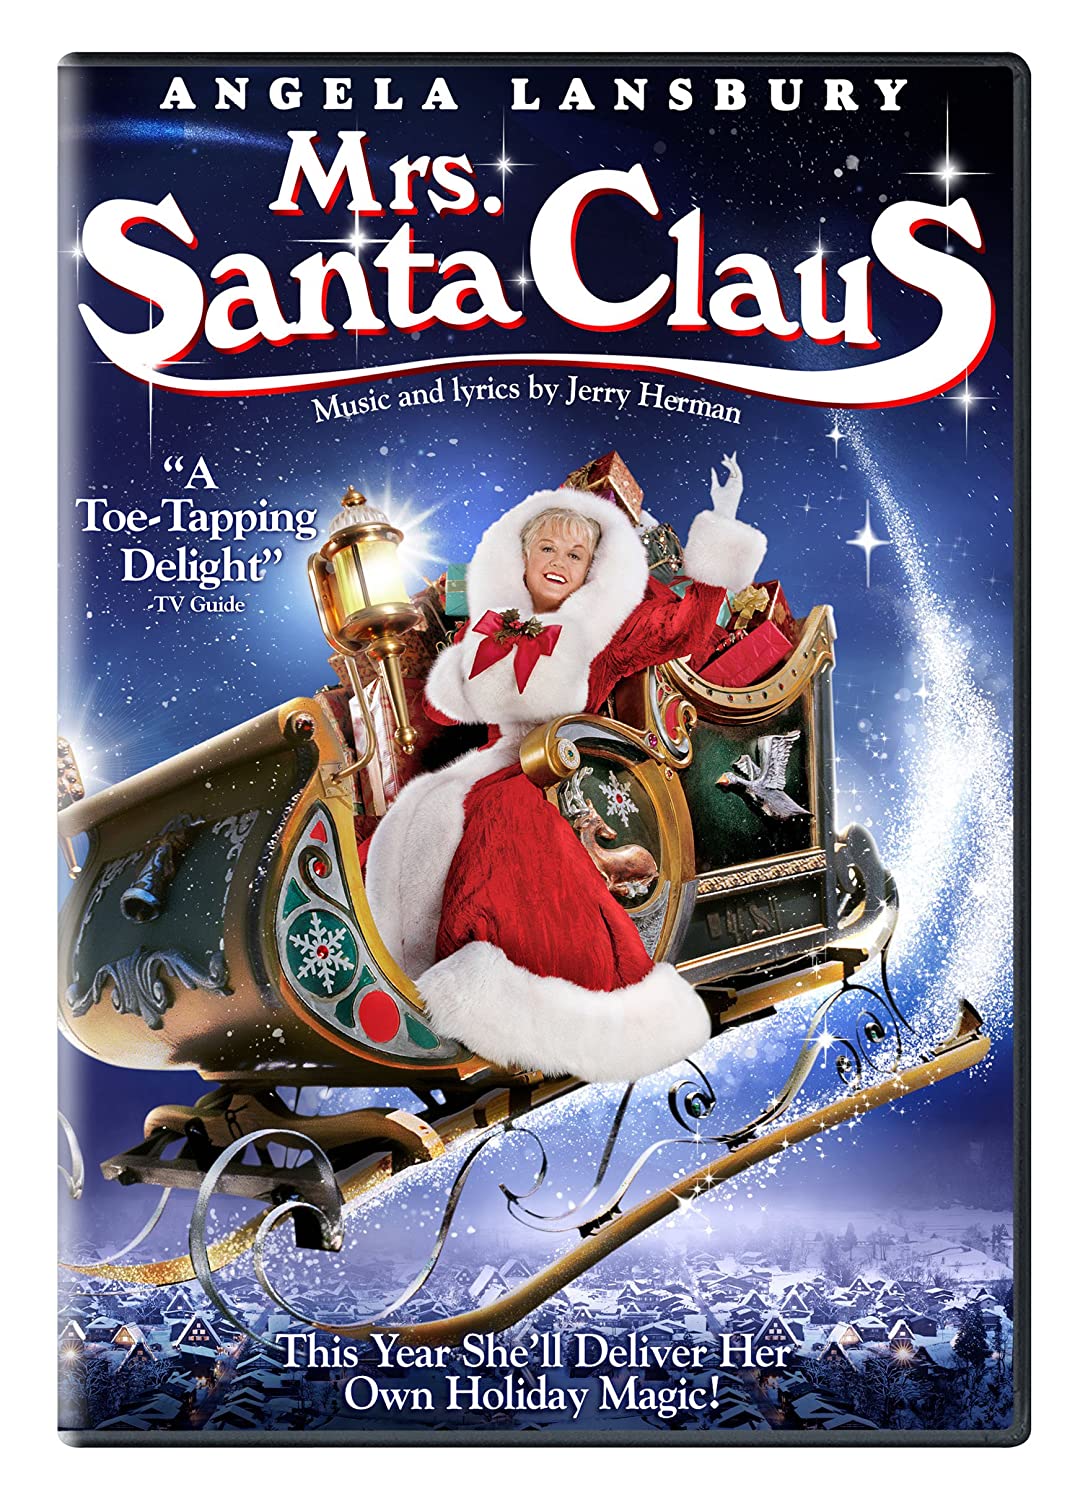 Mrs. Santa Claus (1996) starring Angela Lansbury, Charles Durning, Michael Jeter